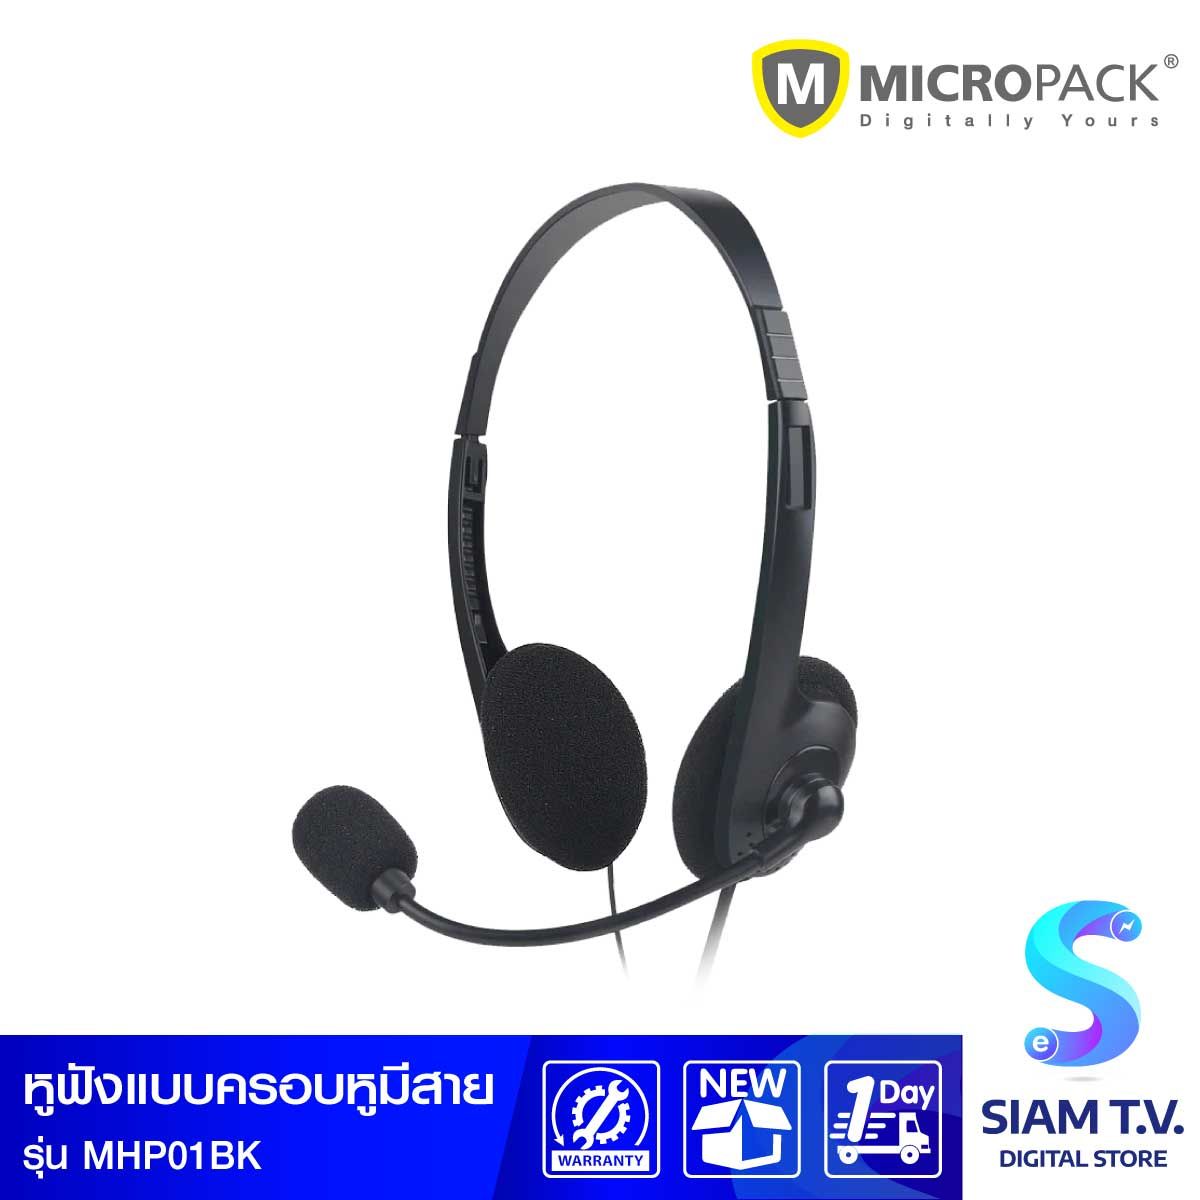 HEADSET (หูฟัง) MICROPACK MHP-01 (BLACK)